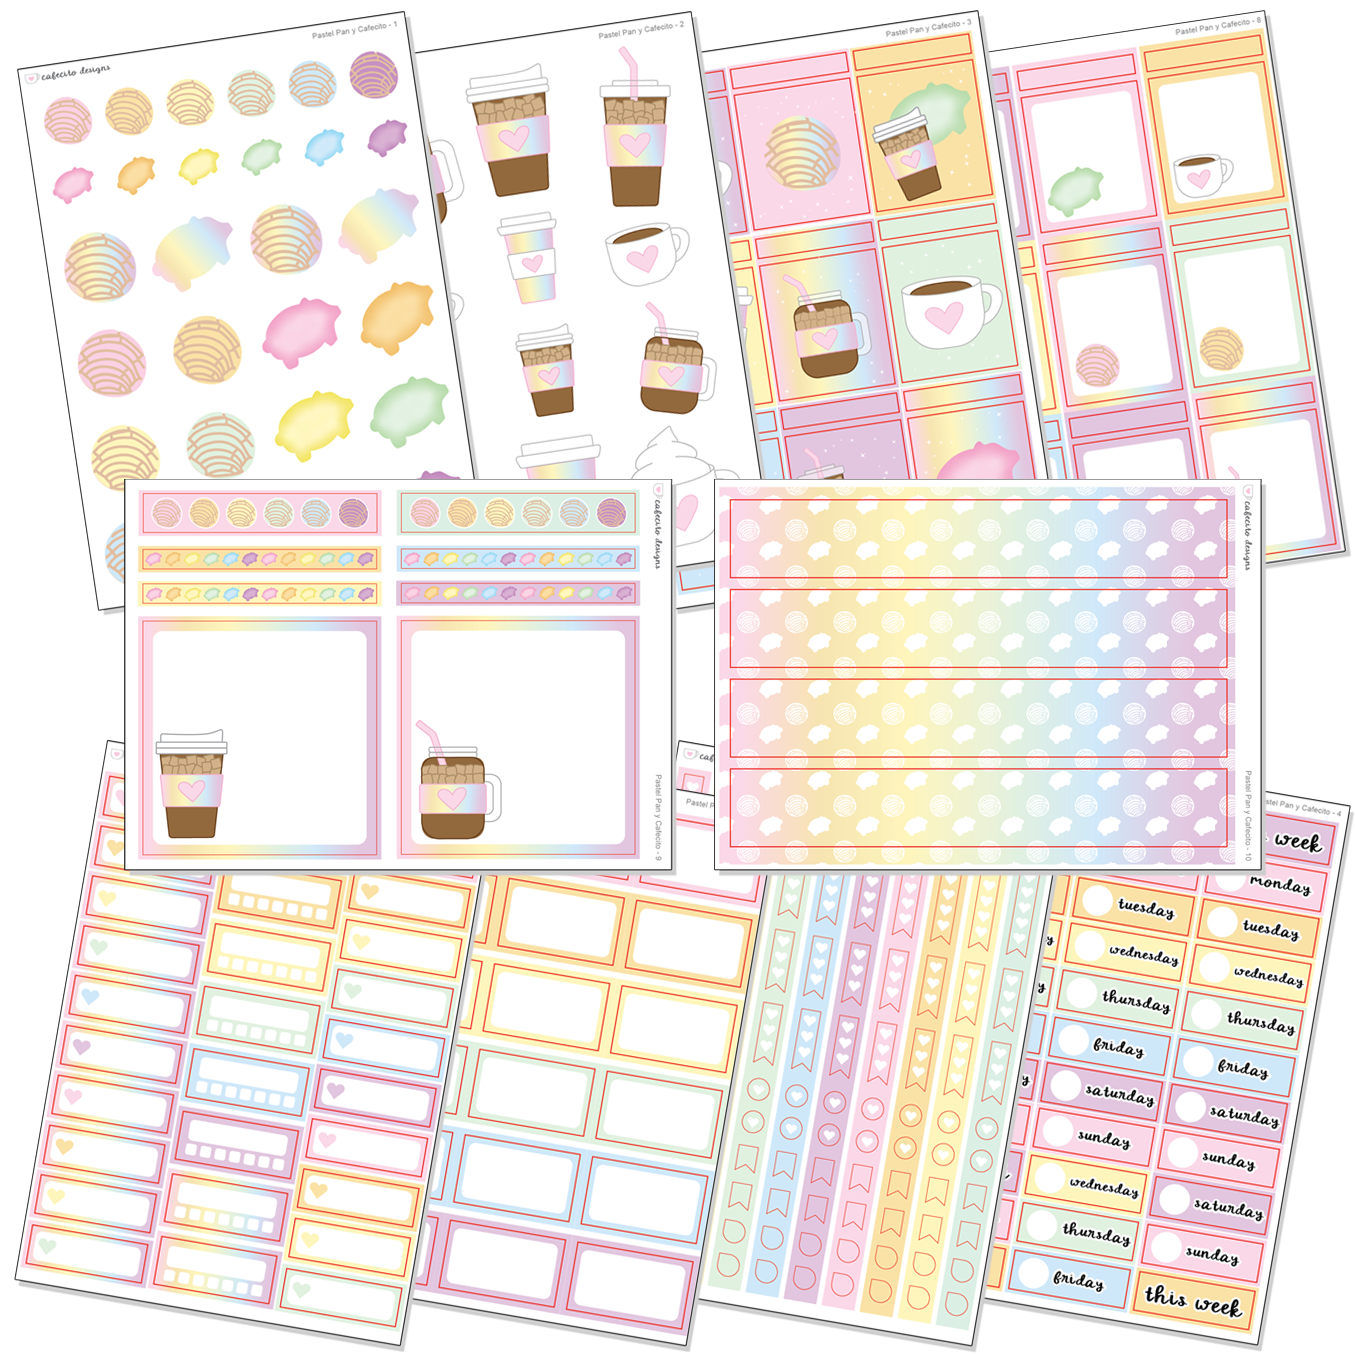 Pastel Pan y Cafecito - Sticker Kit